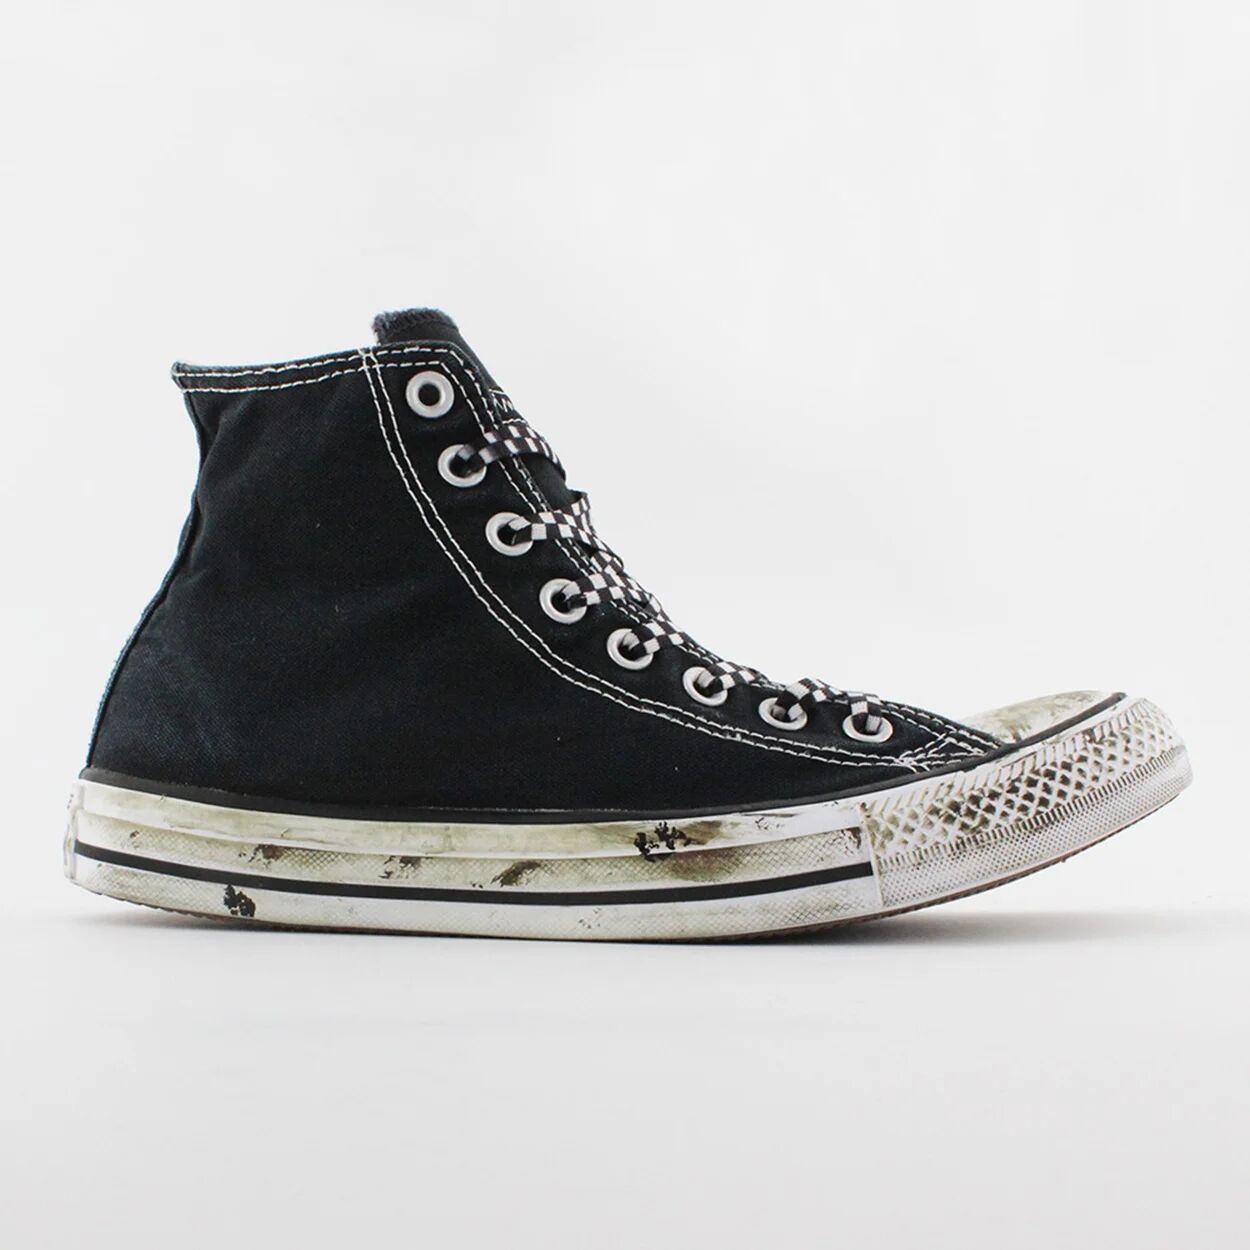 Mimanera CONVERSE ALL STAR Sneakers in tela sporcate con vernice nere